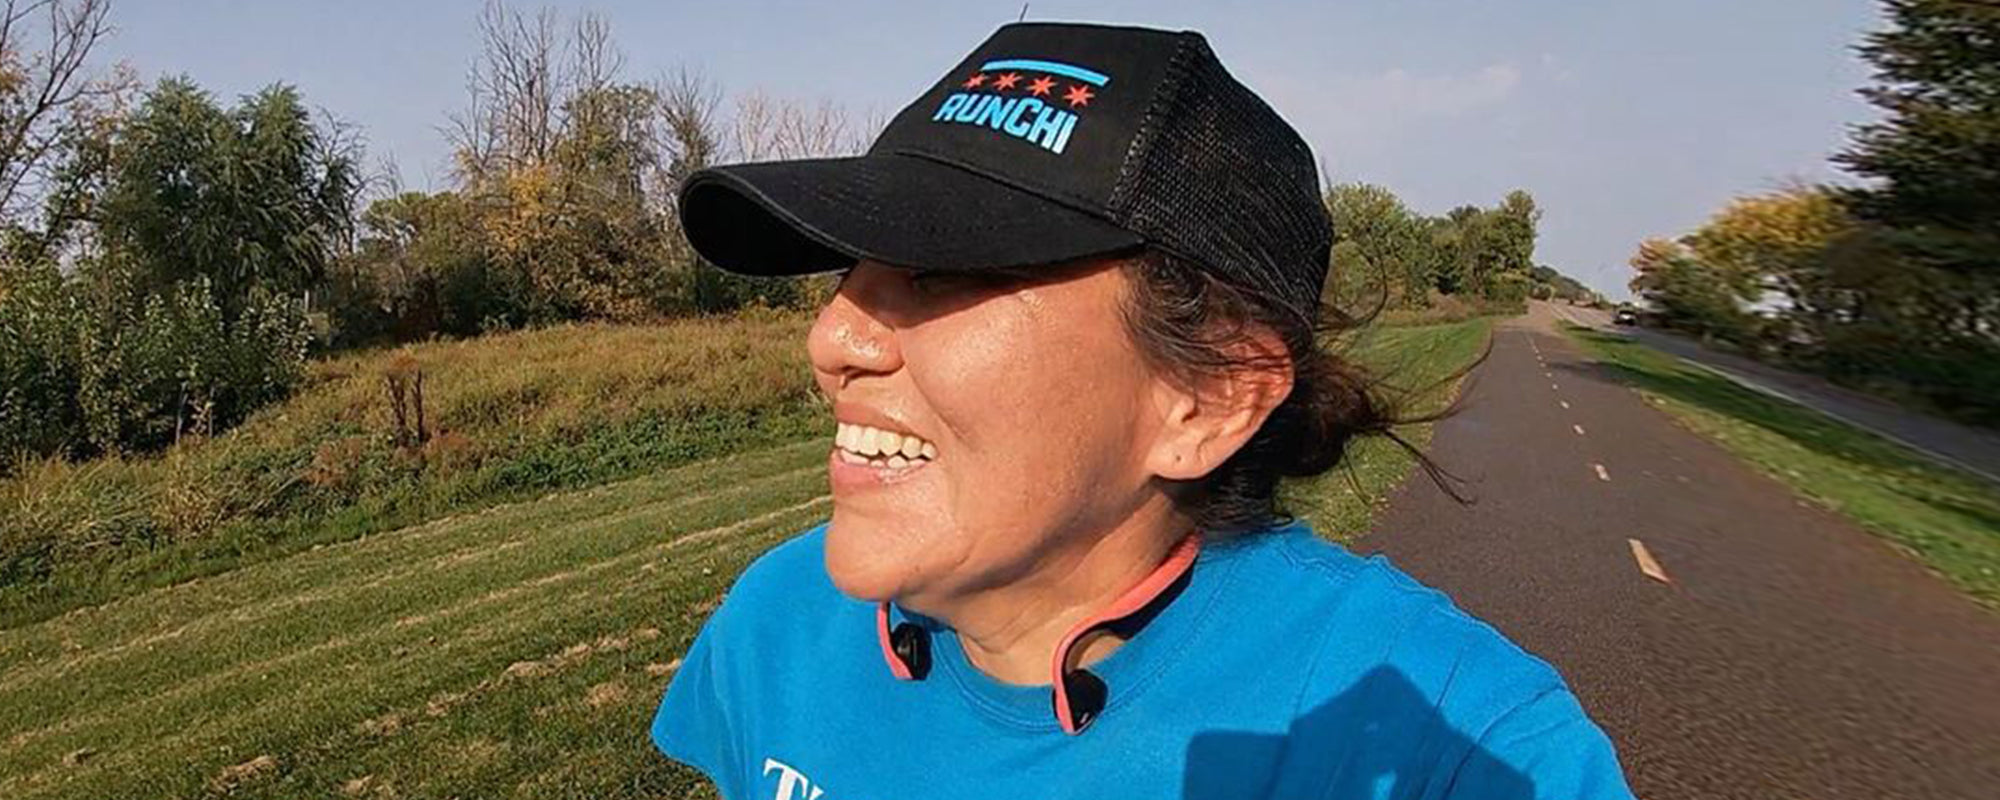 Navajo runner Verna wears AfterShokz headphones while running